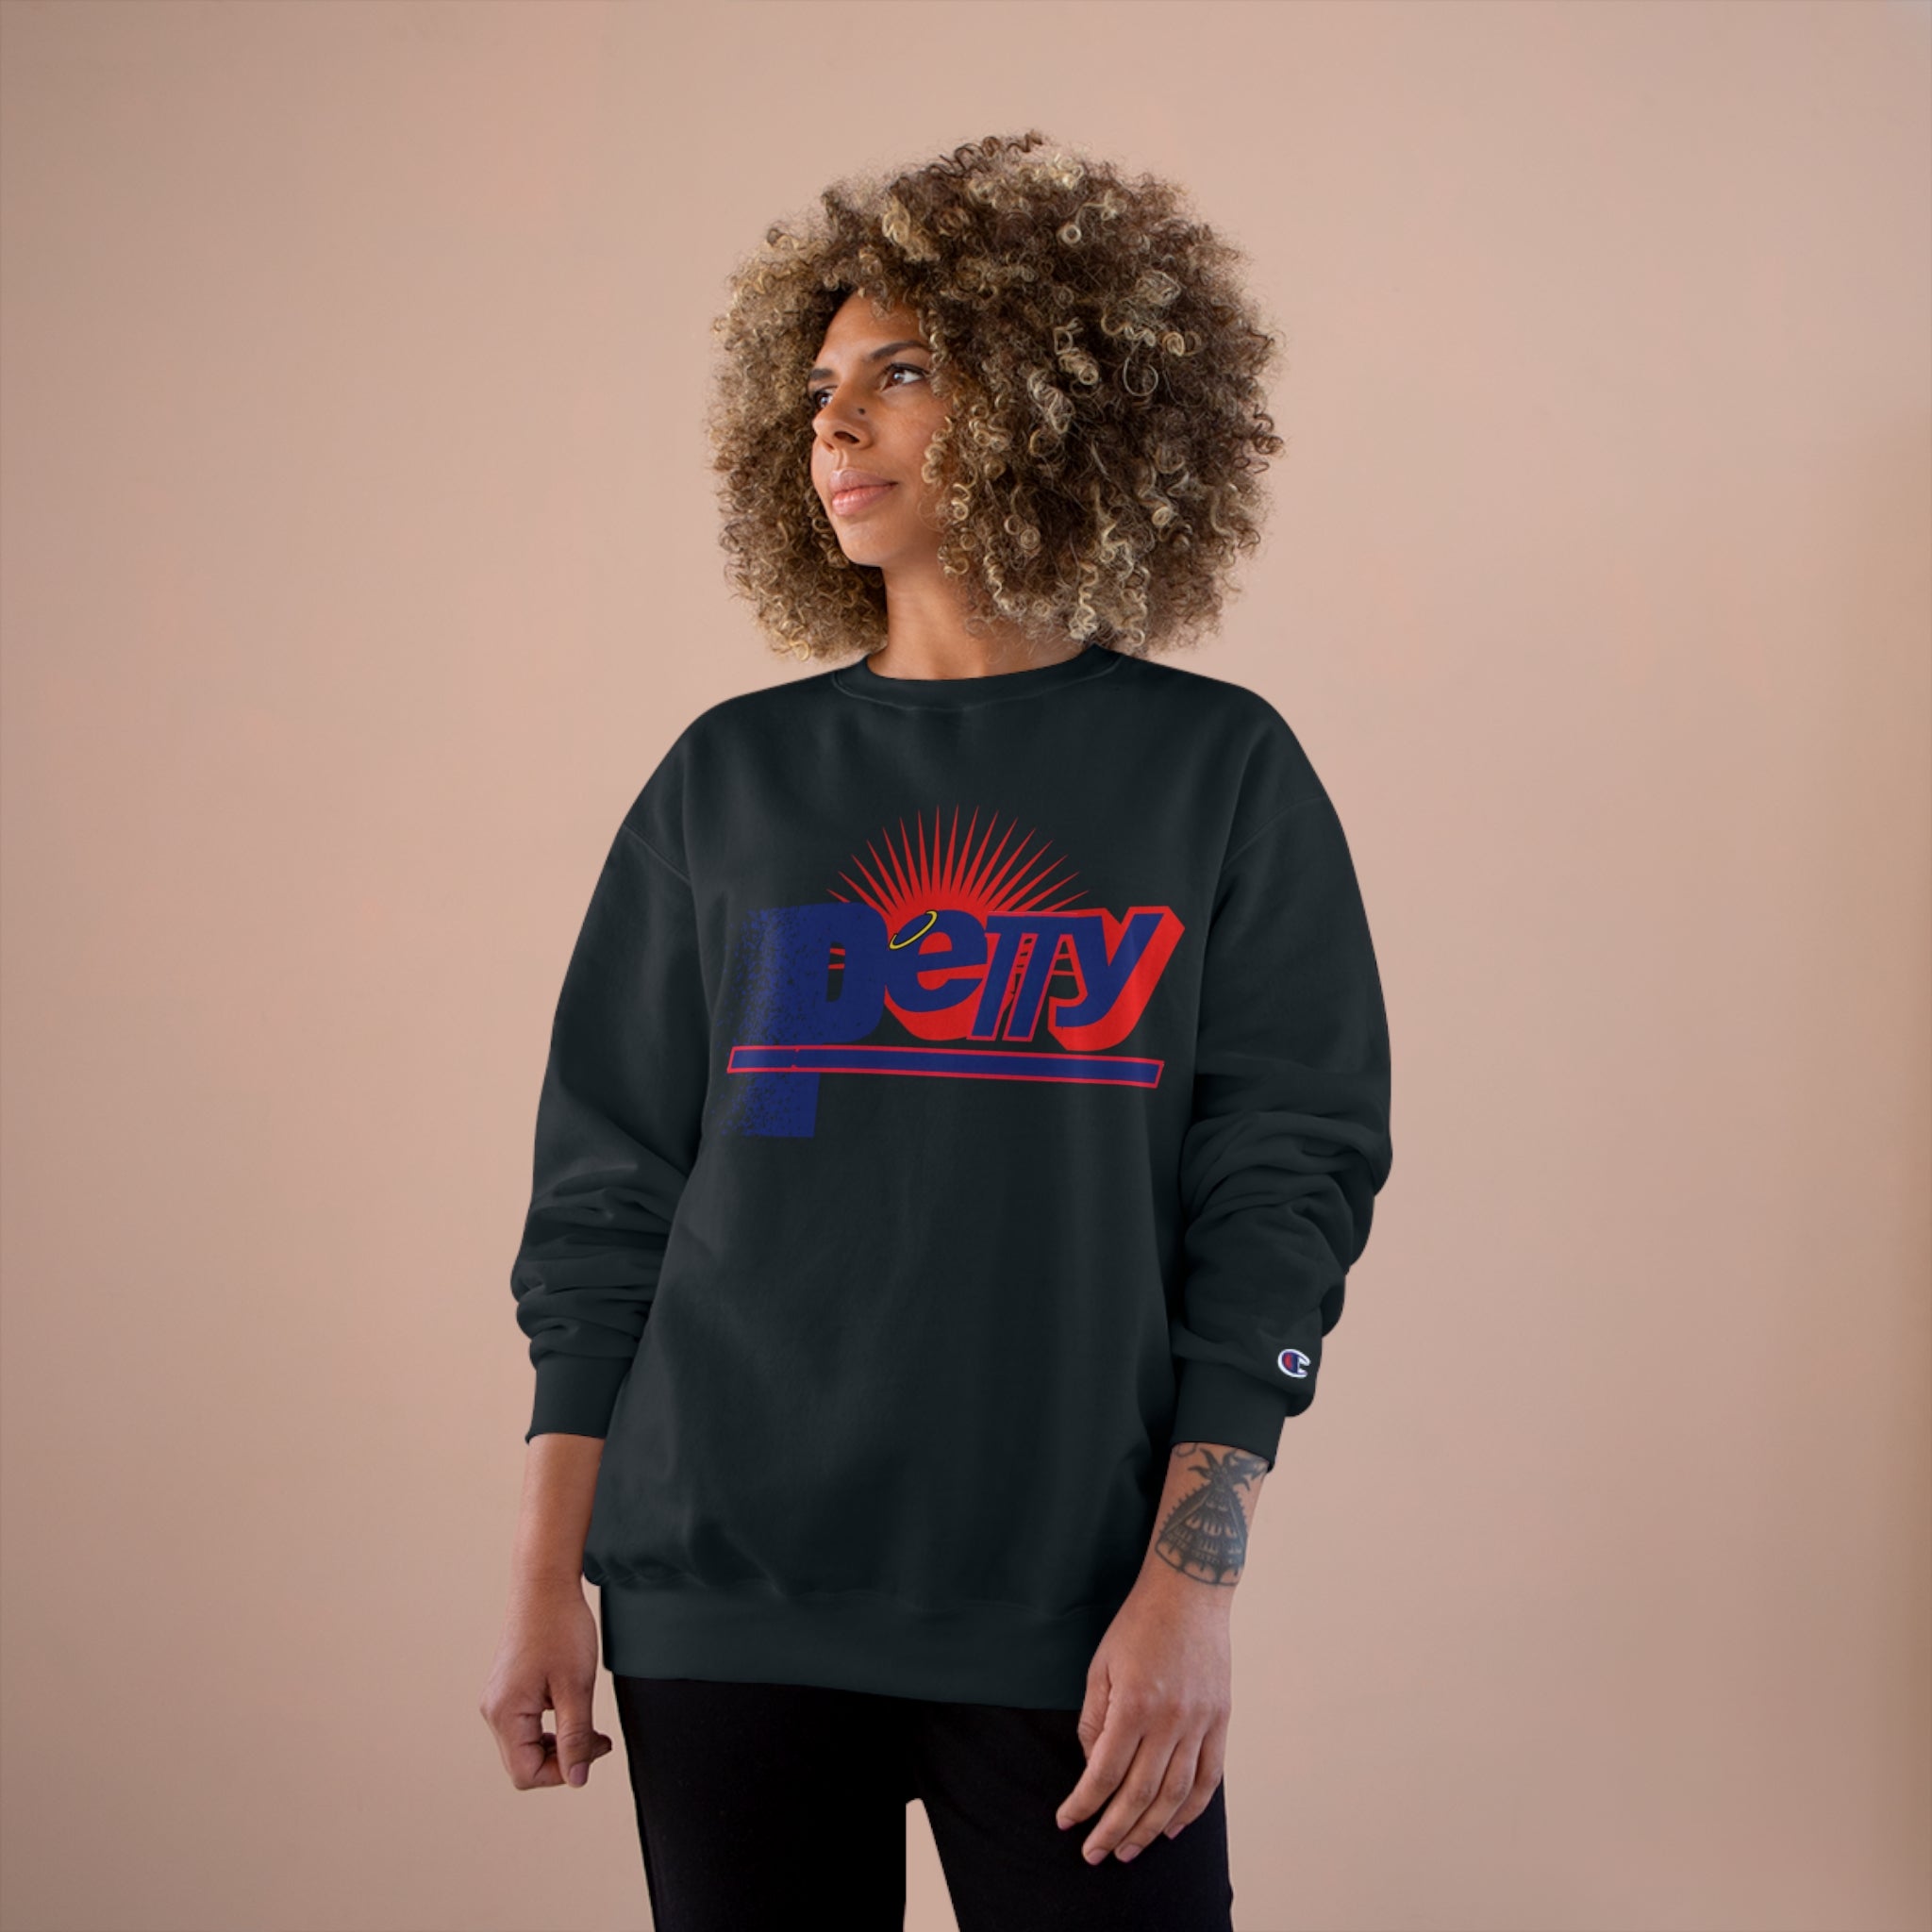 FURDreams ”NYC” XVII Champion Sweatshirt